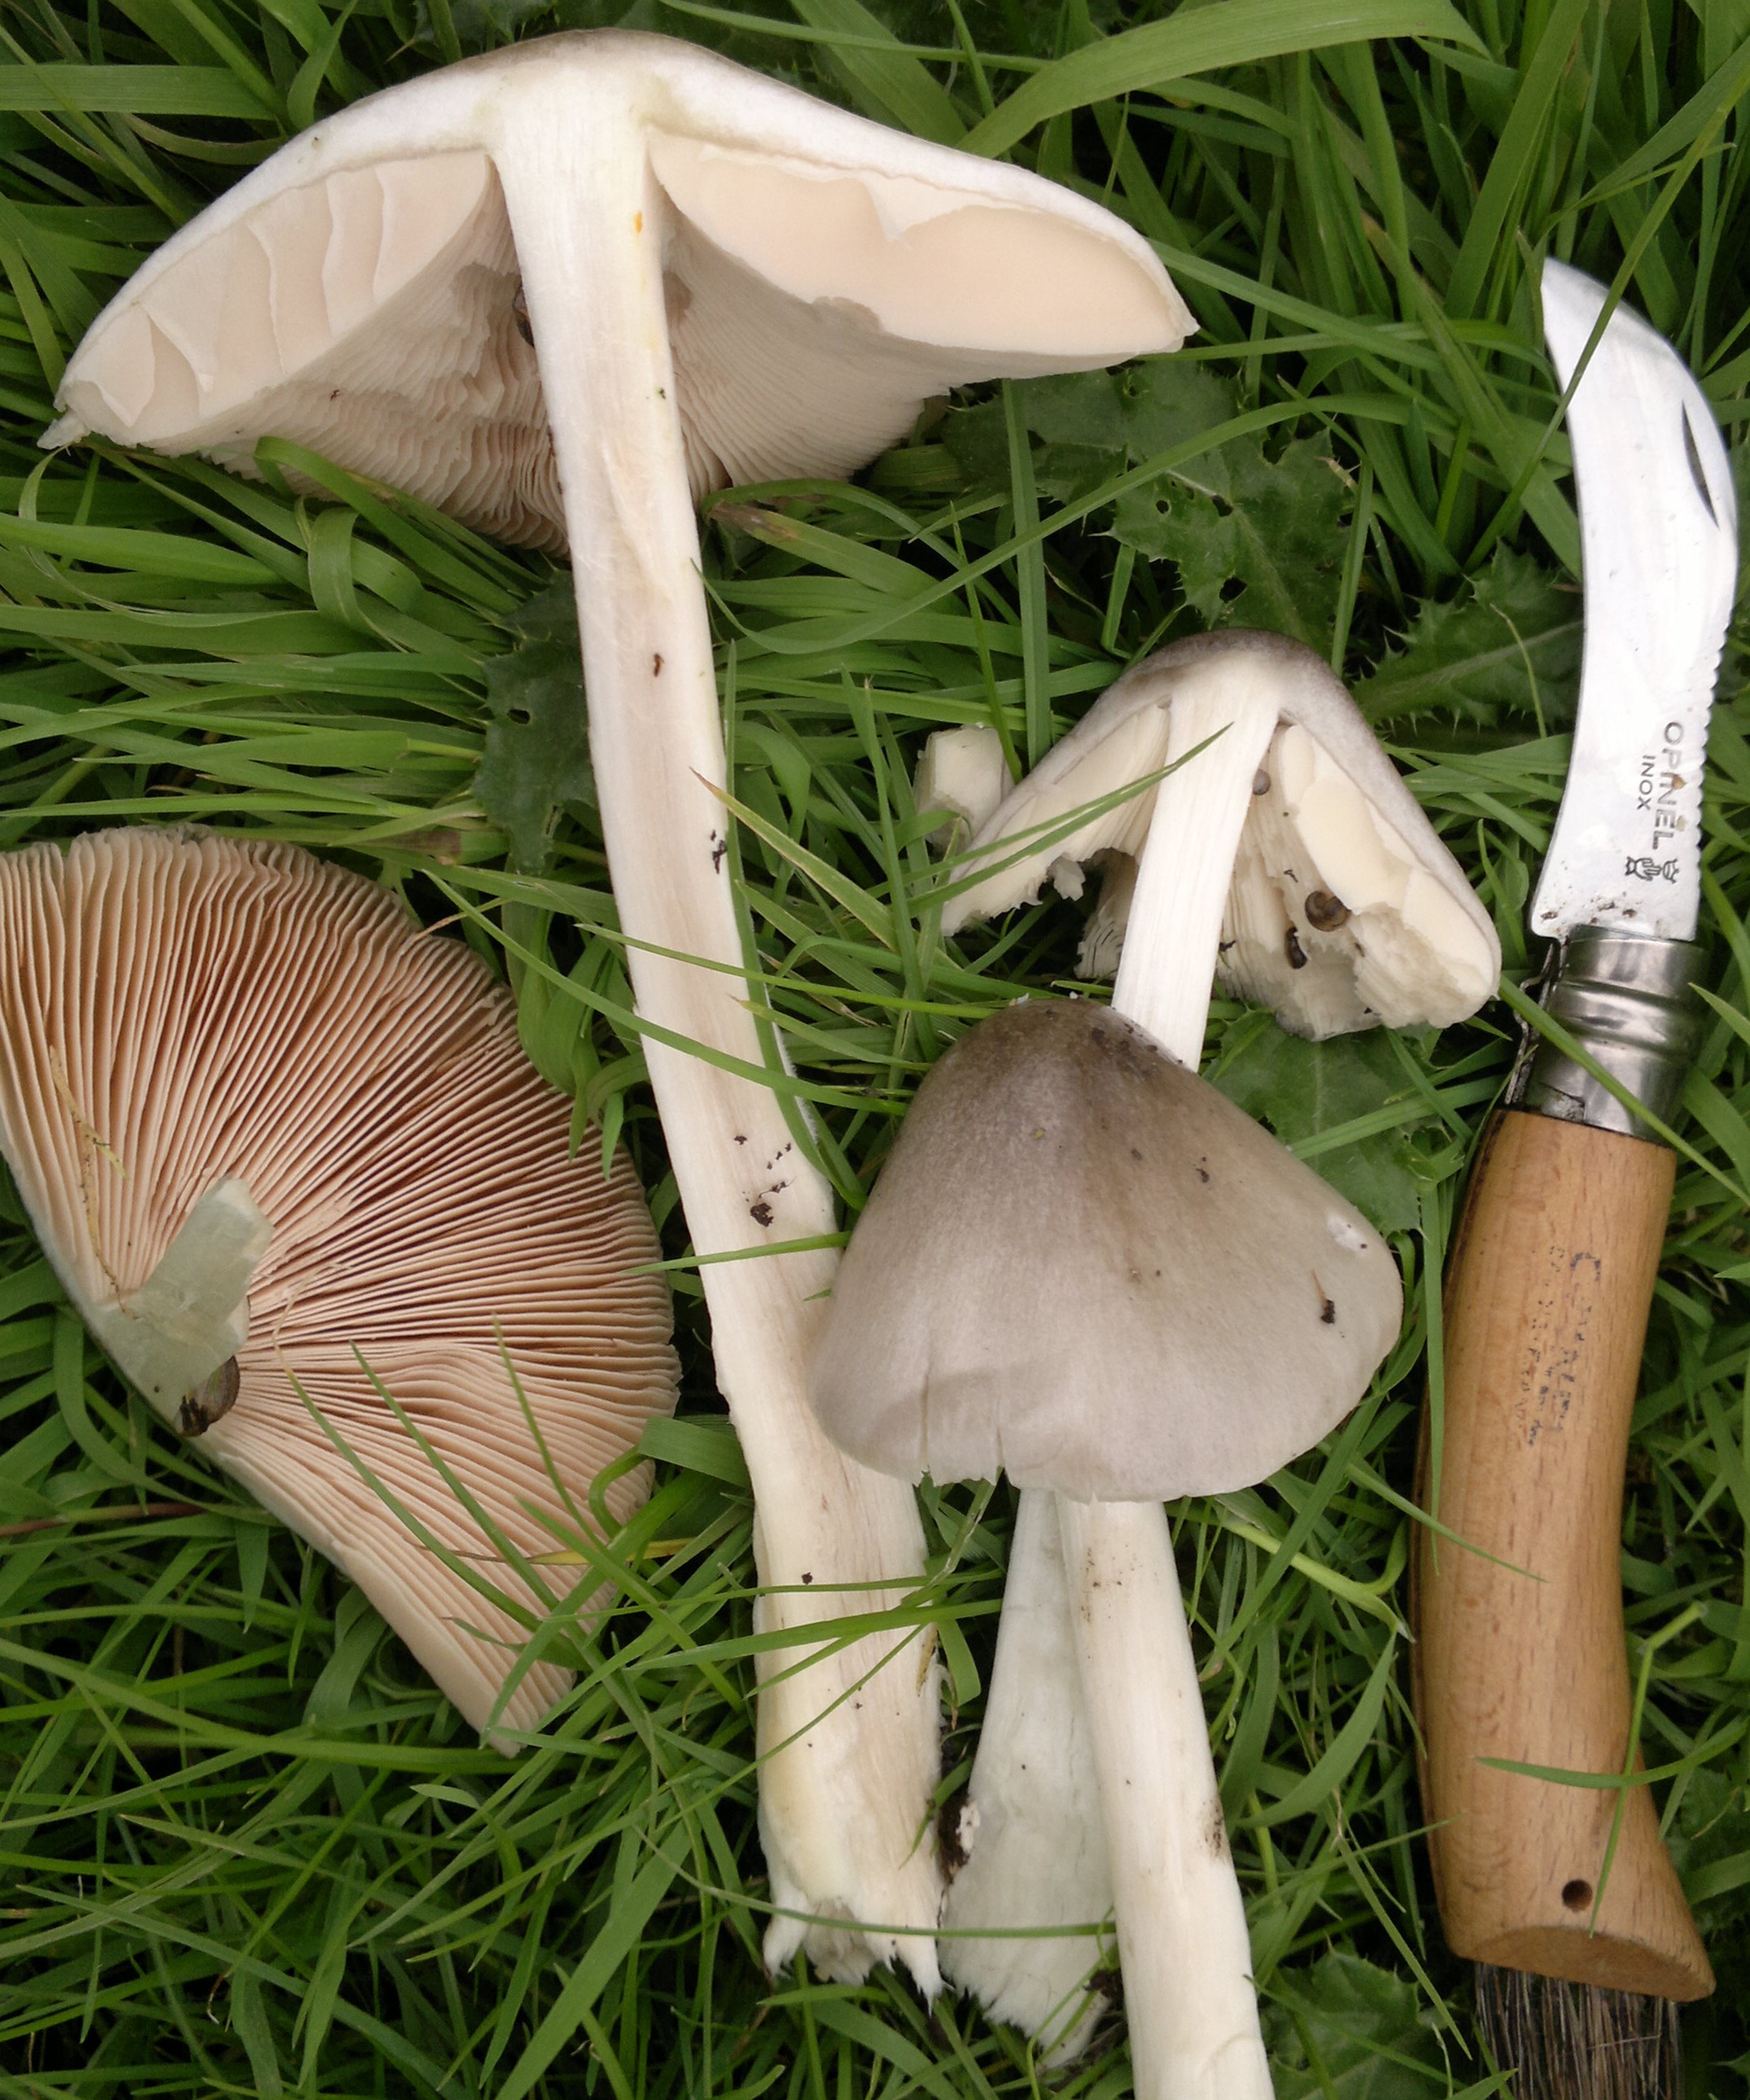 Mushroom Knife With Brush Forged Knive for Mushroom Harvest